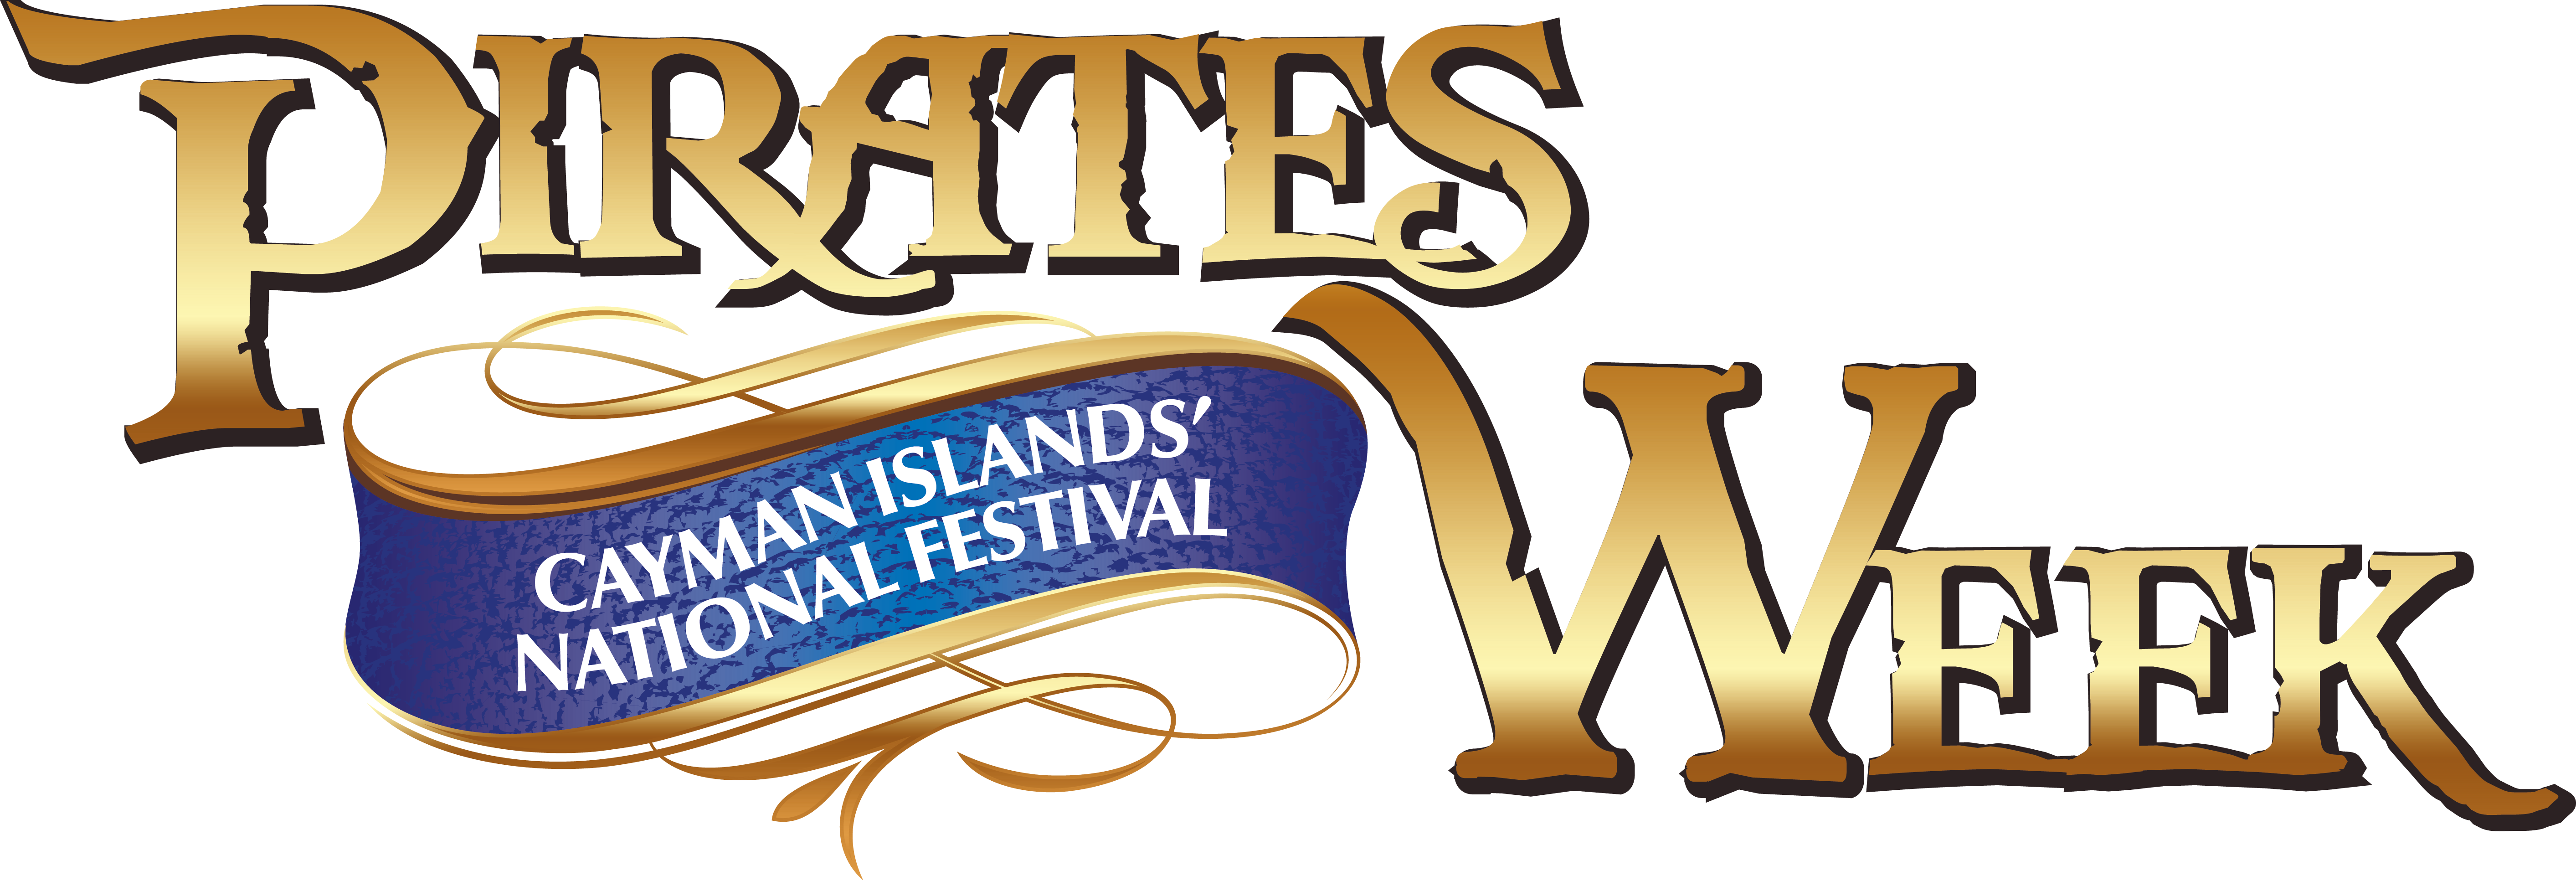 Sponsors - Cayman Islands Pirates Week Festival Office (5653x1933)